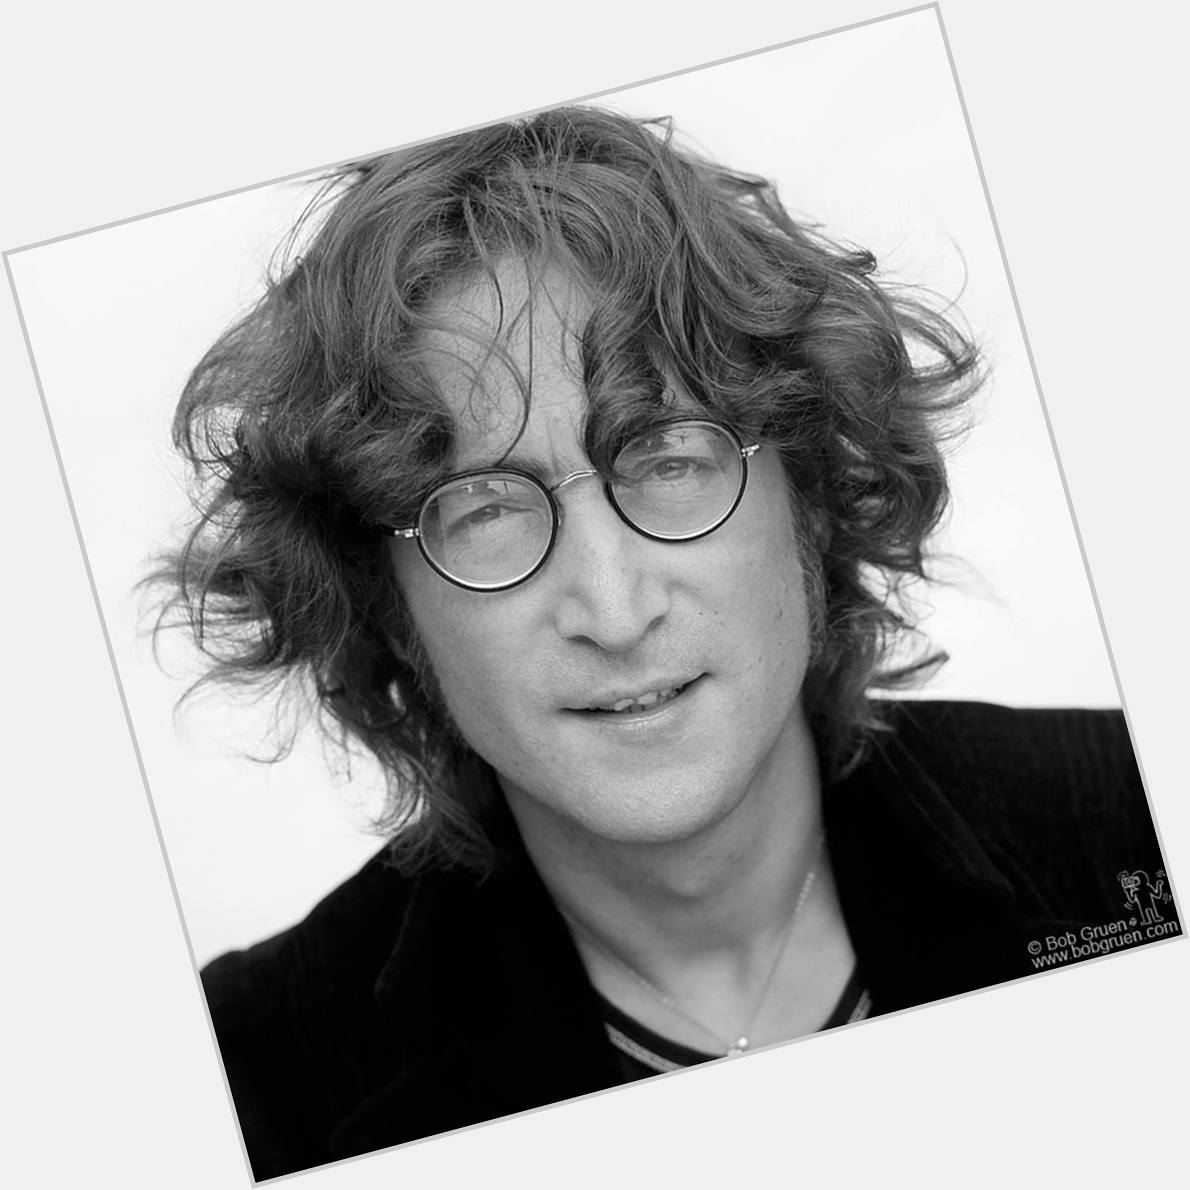 ¡John Lennon! Happy Birthday   